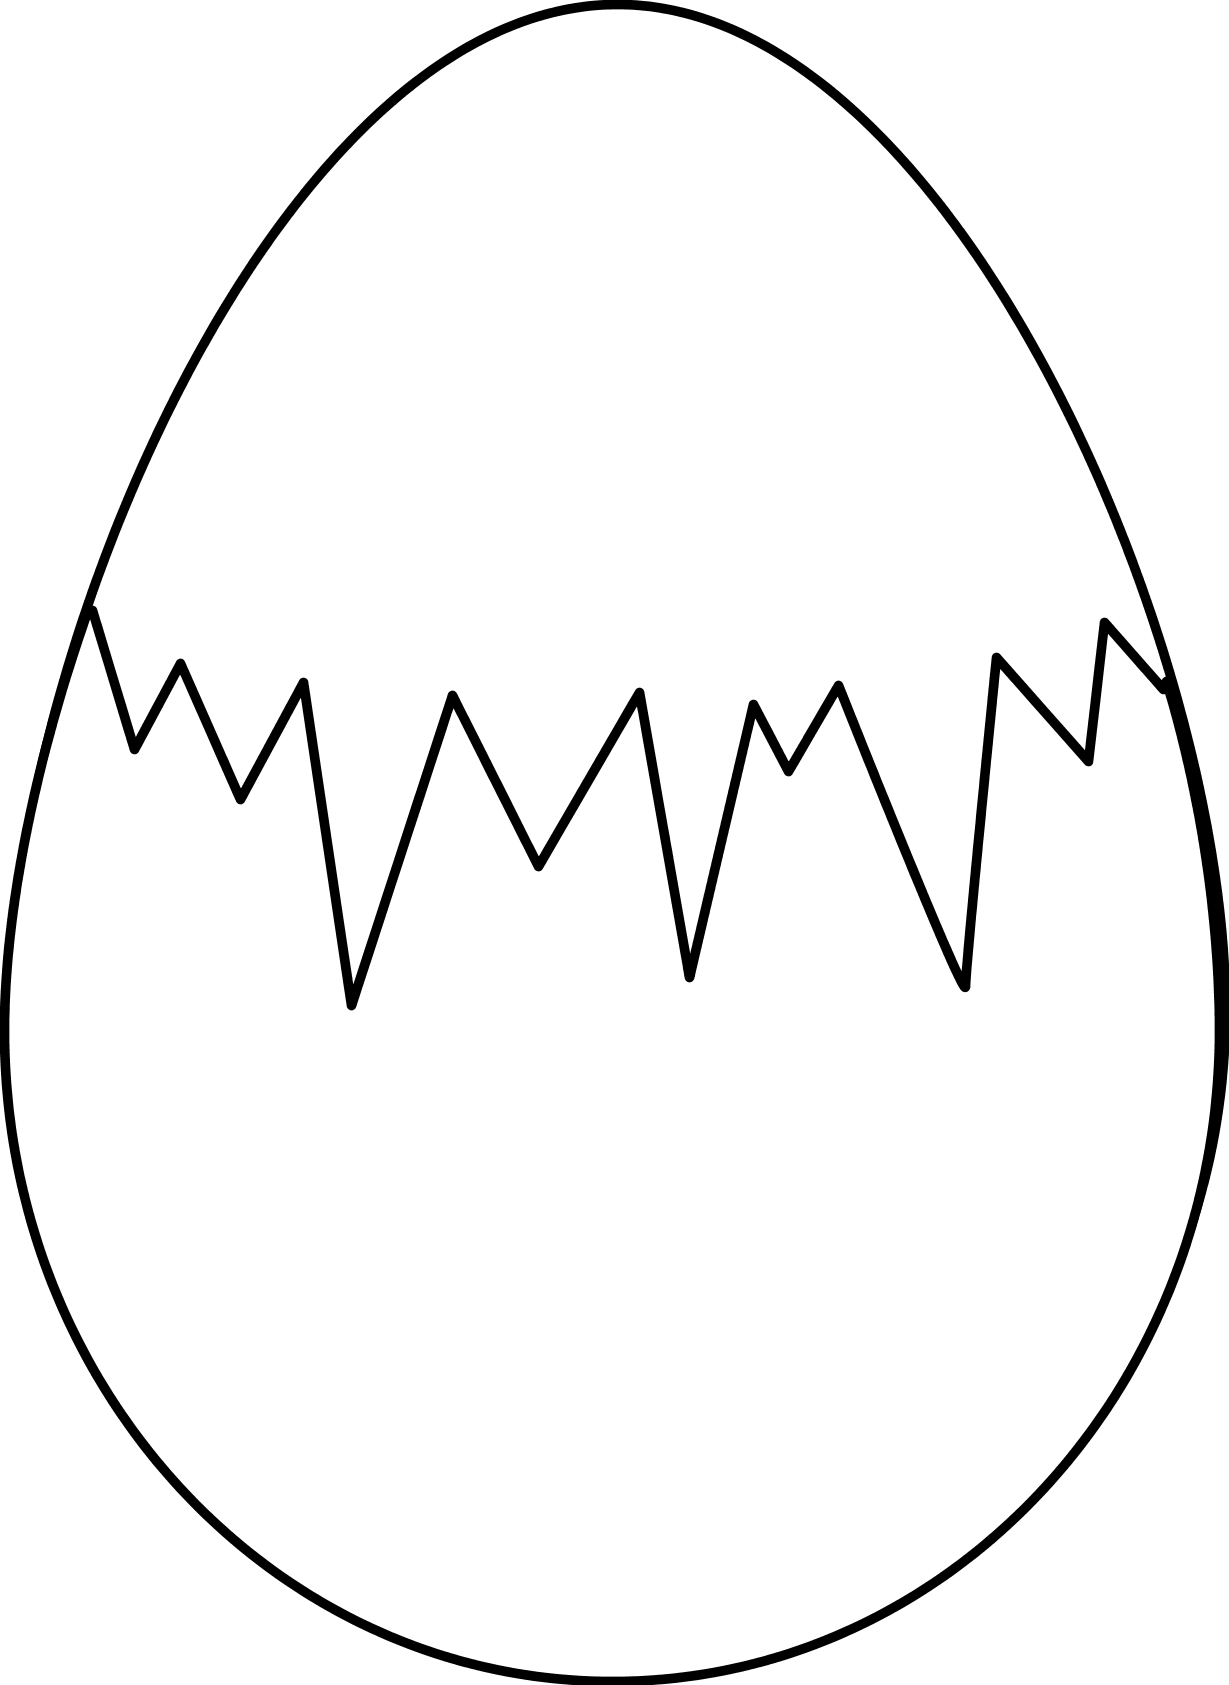 Fracture Clipart Egg Clip Art - Egg Clip Art